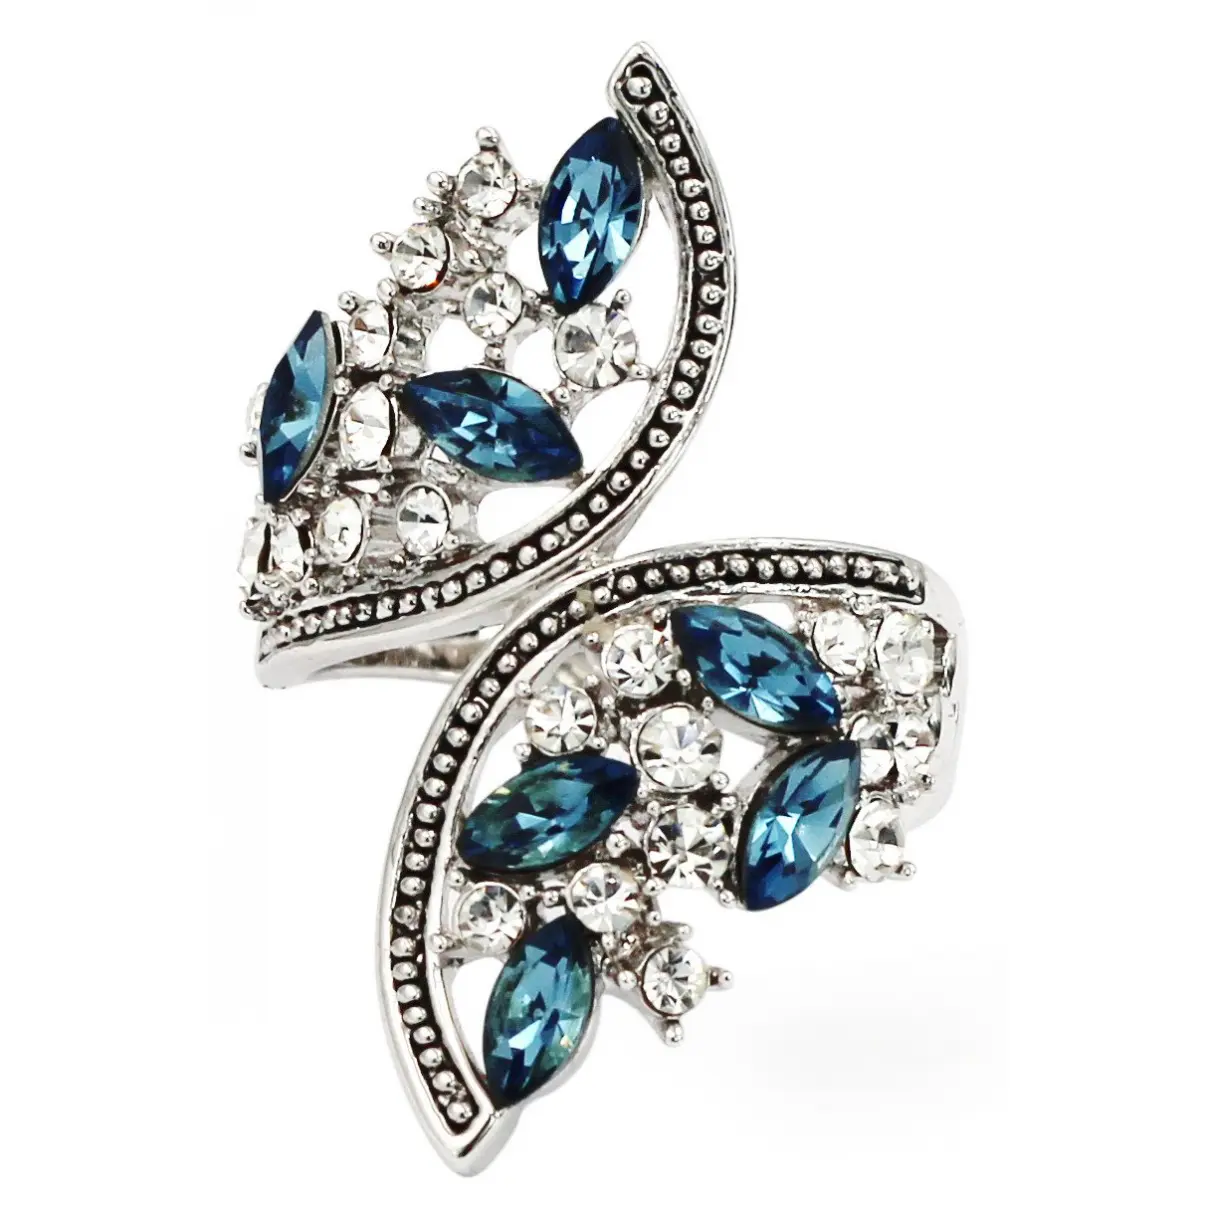 Buy Ocean fashion Crystal ring online